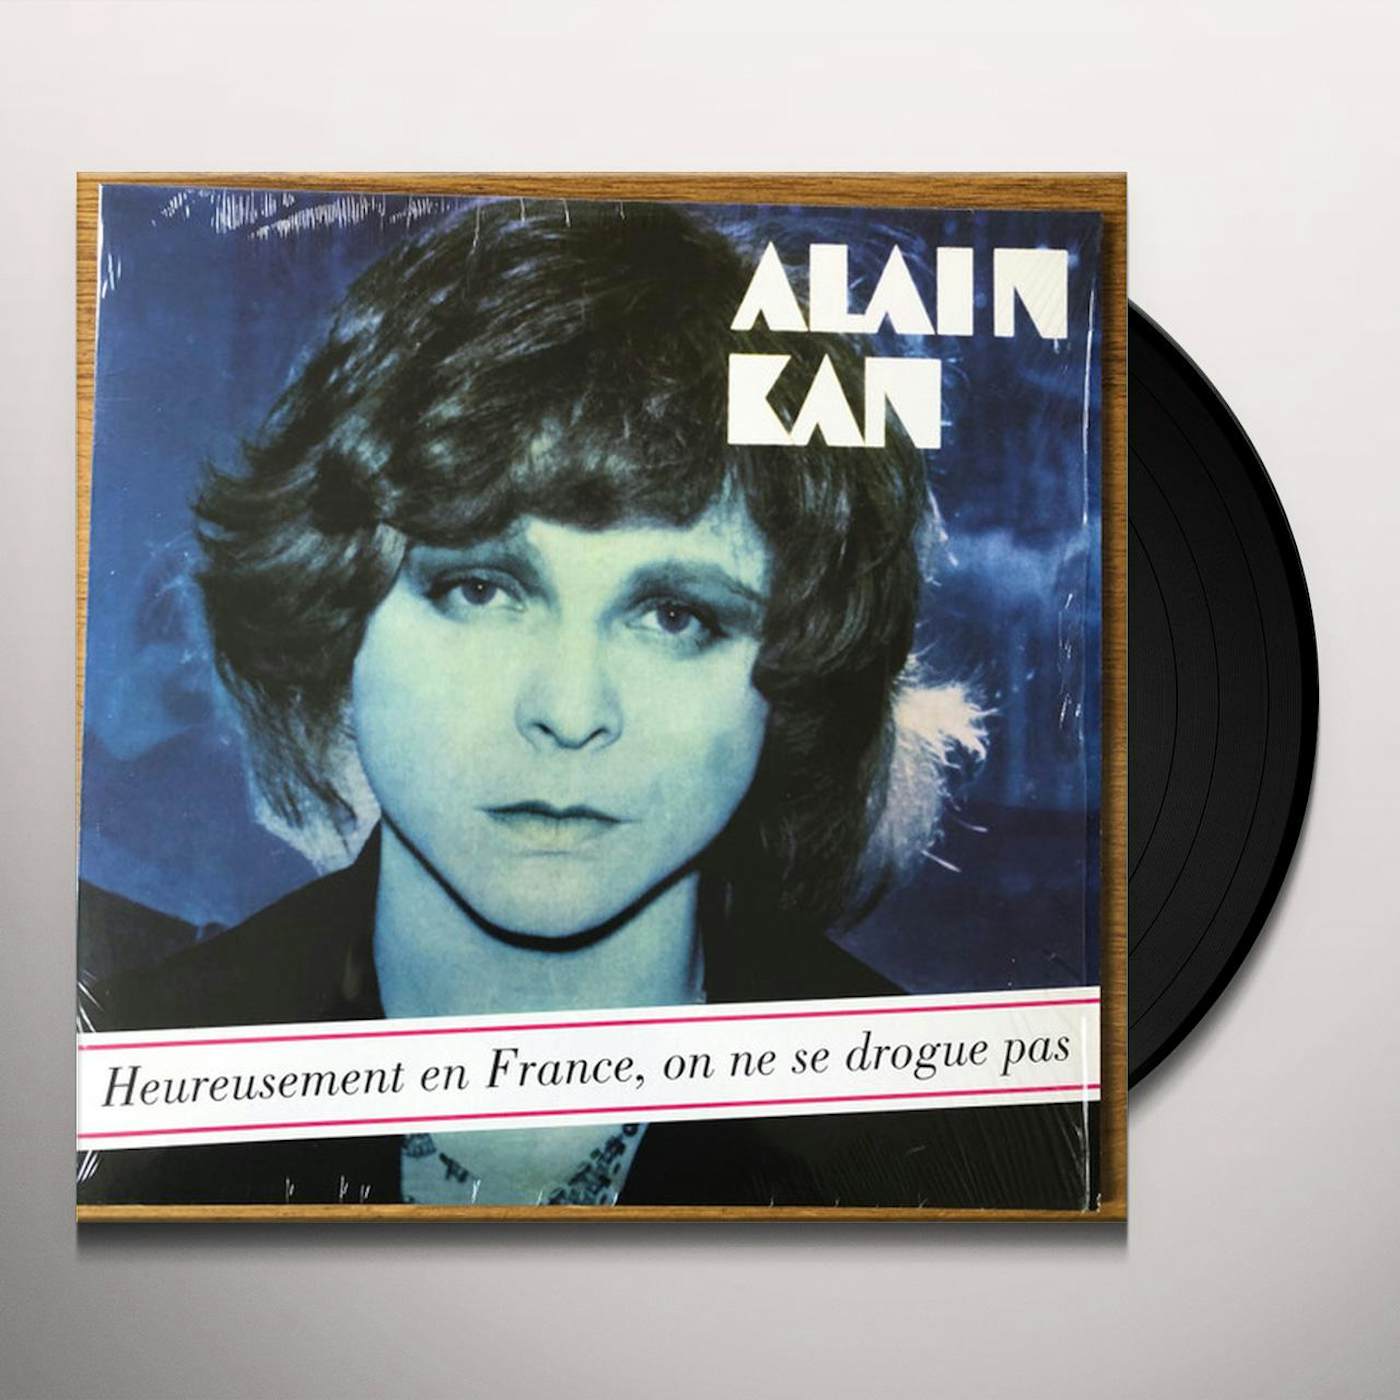 Alain Kan HEUREUSEMENT EN FRANCE ON NE Vinyl Record